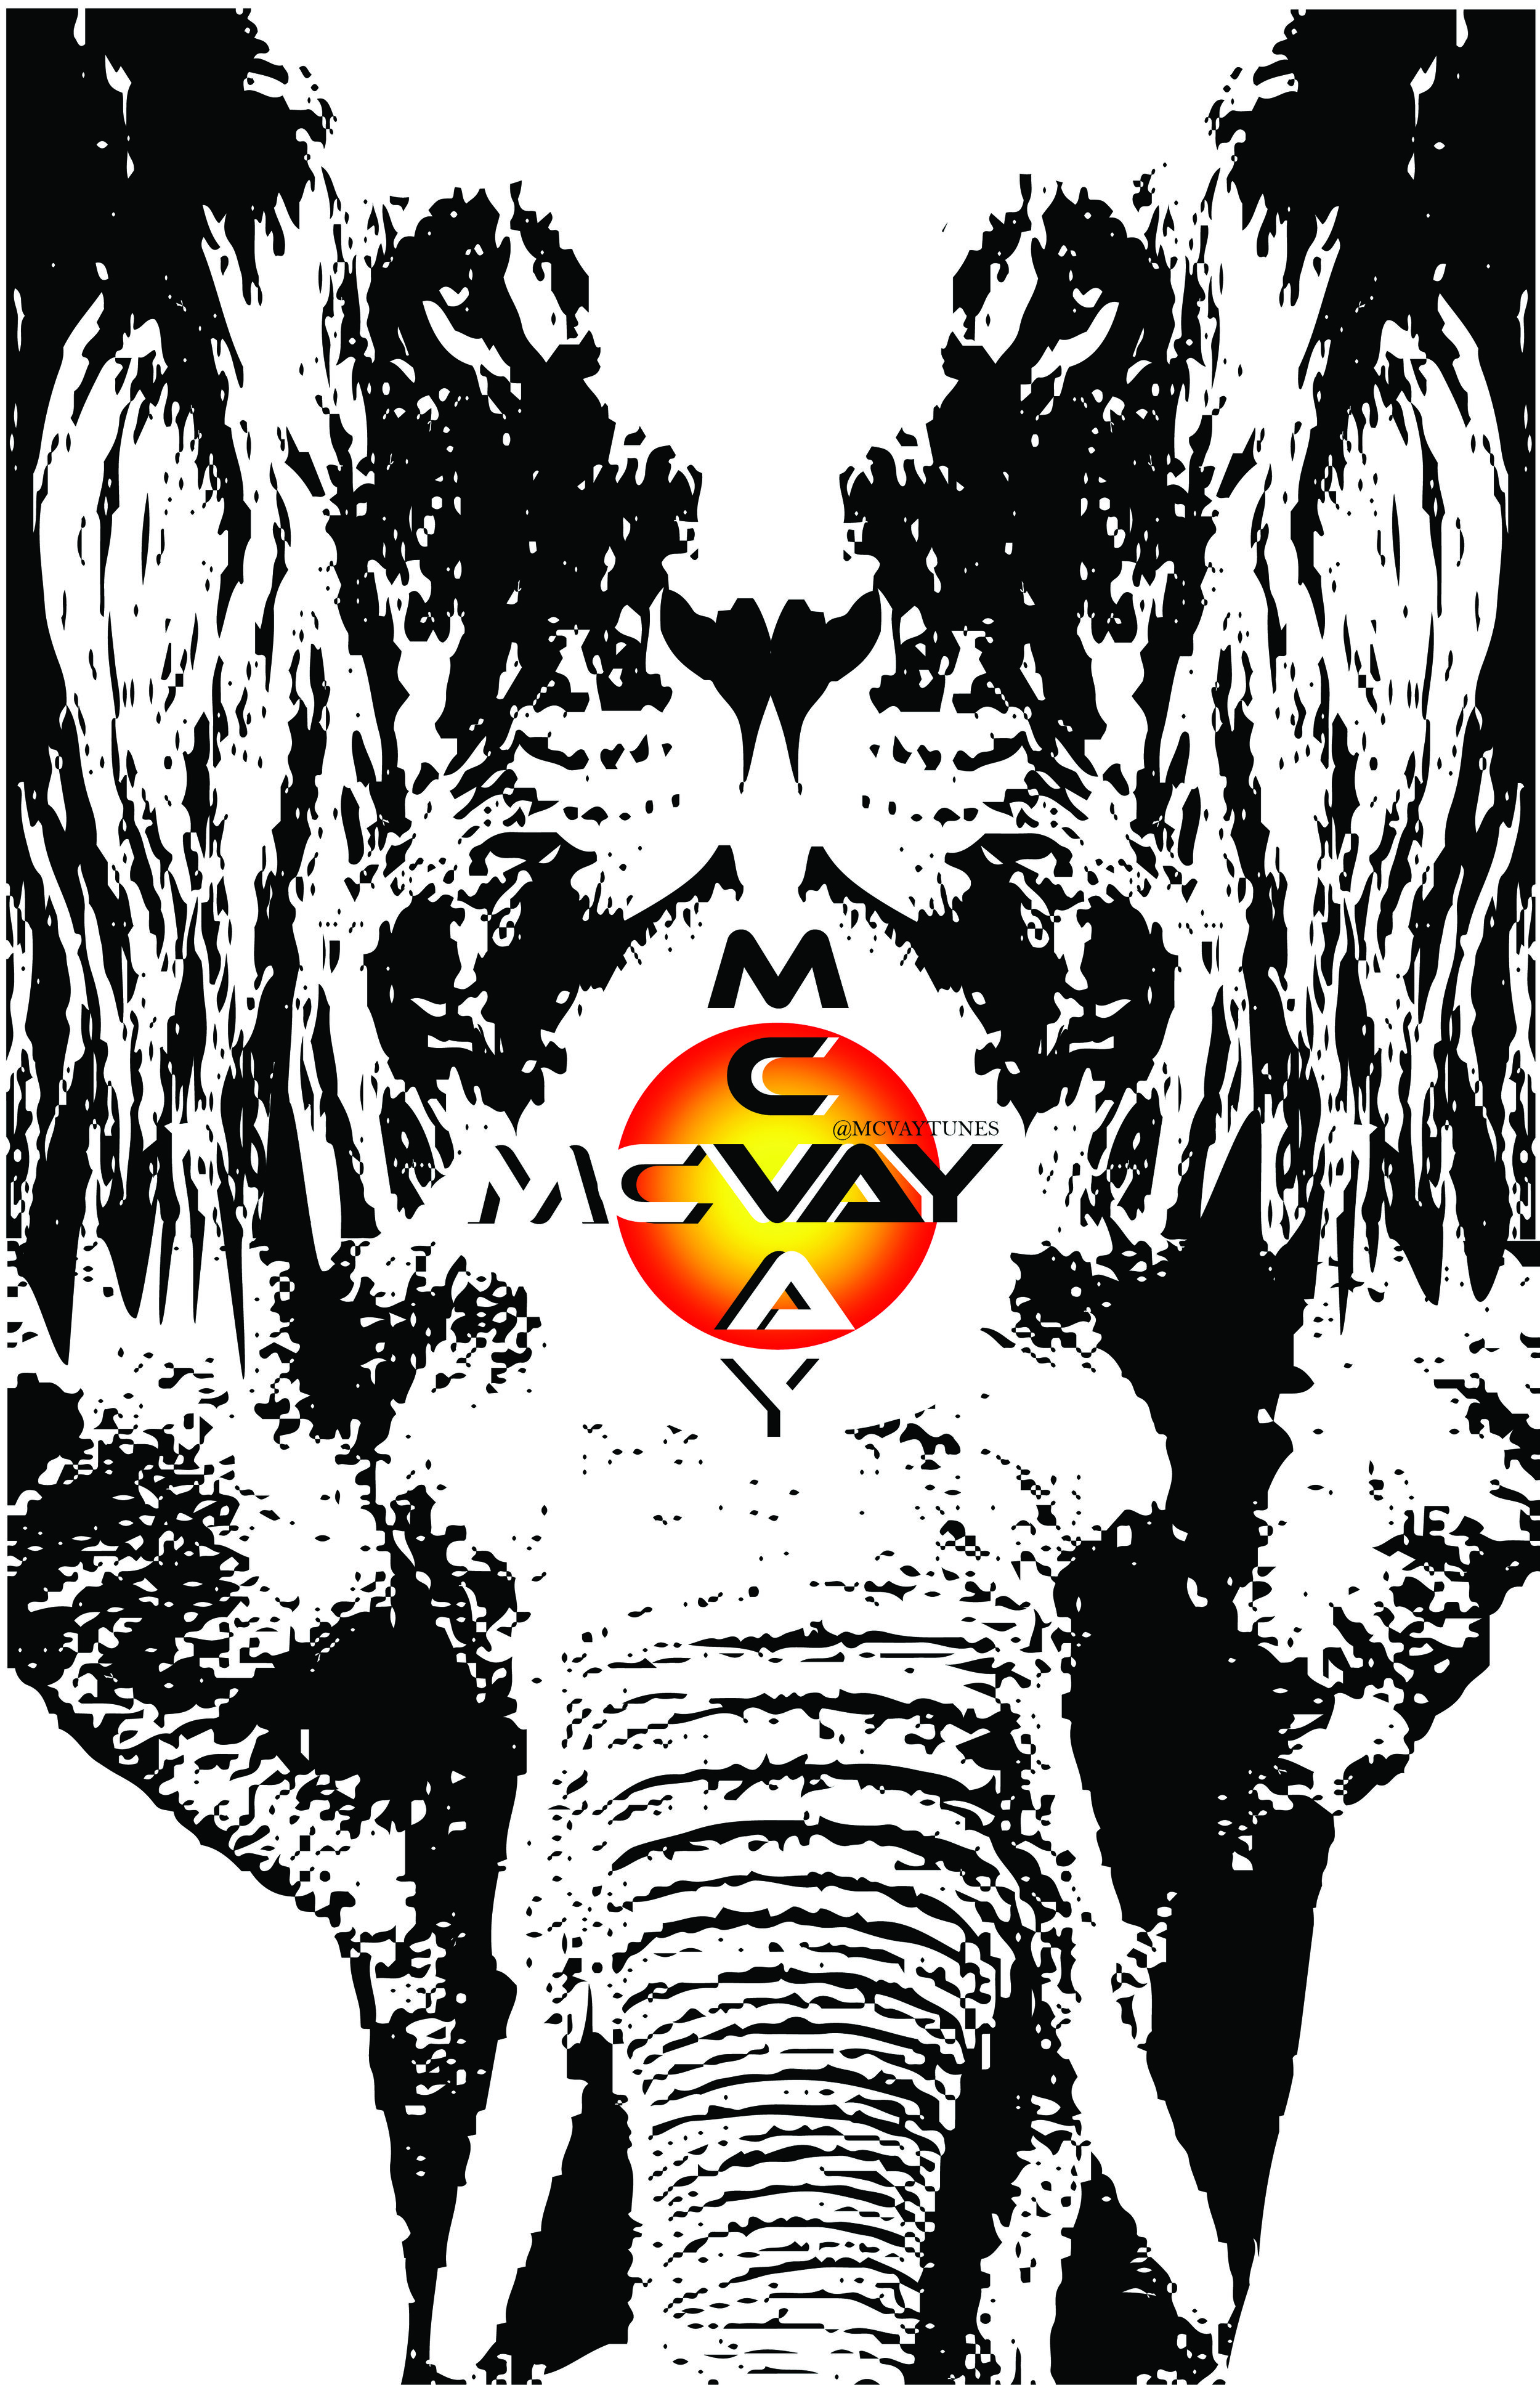 MCVAY POSTER LION ELEPHANT BLK WHT.jpg